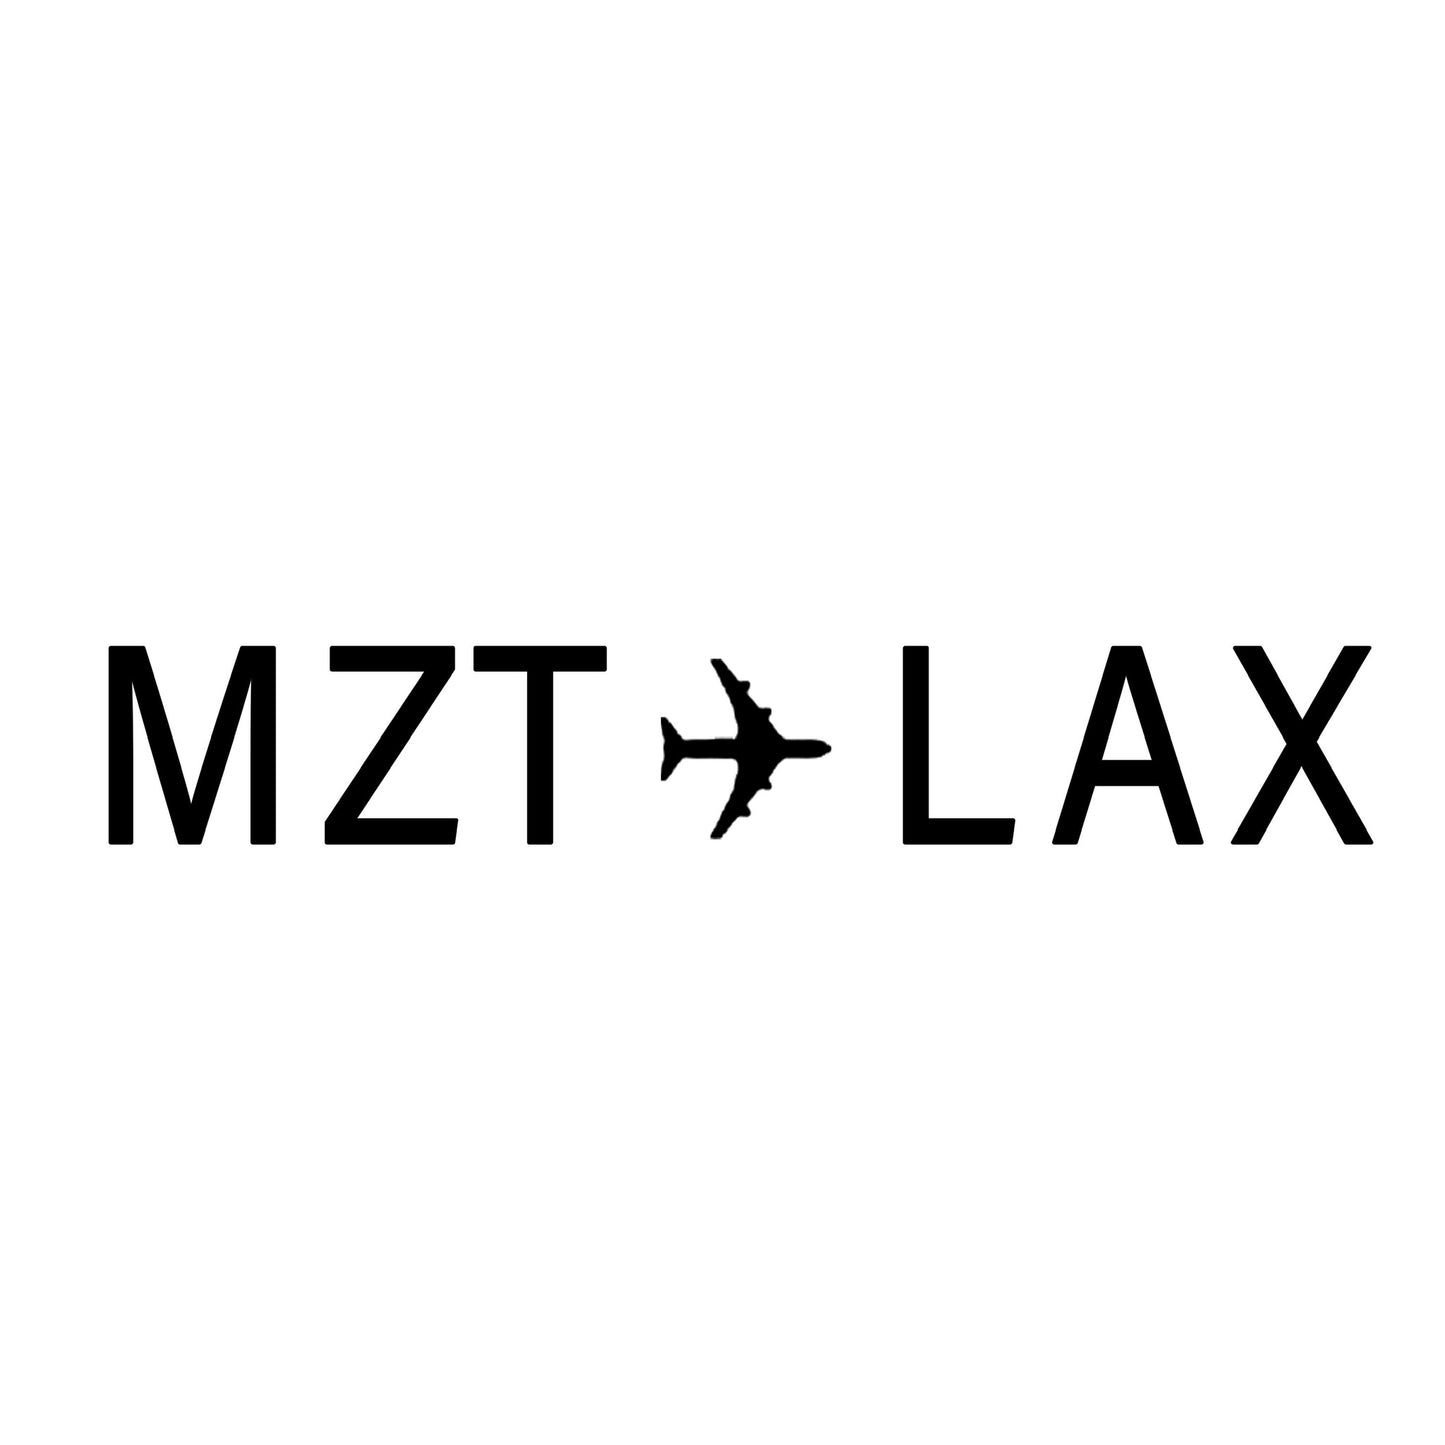 "MZT to LAX" Tee